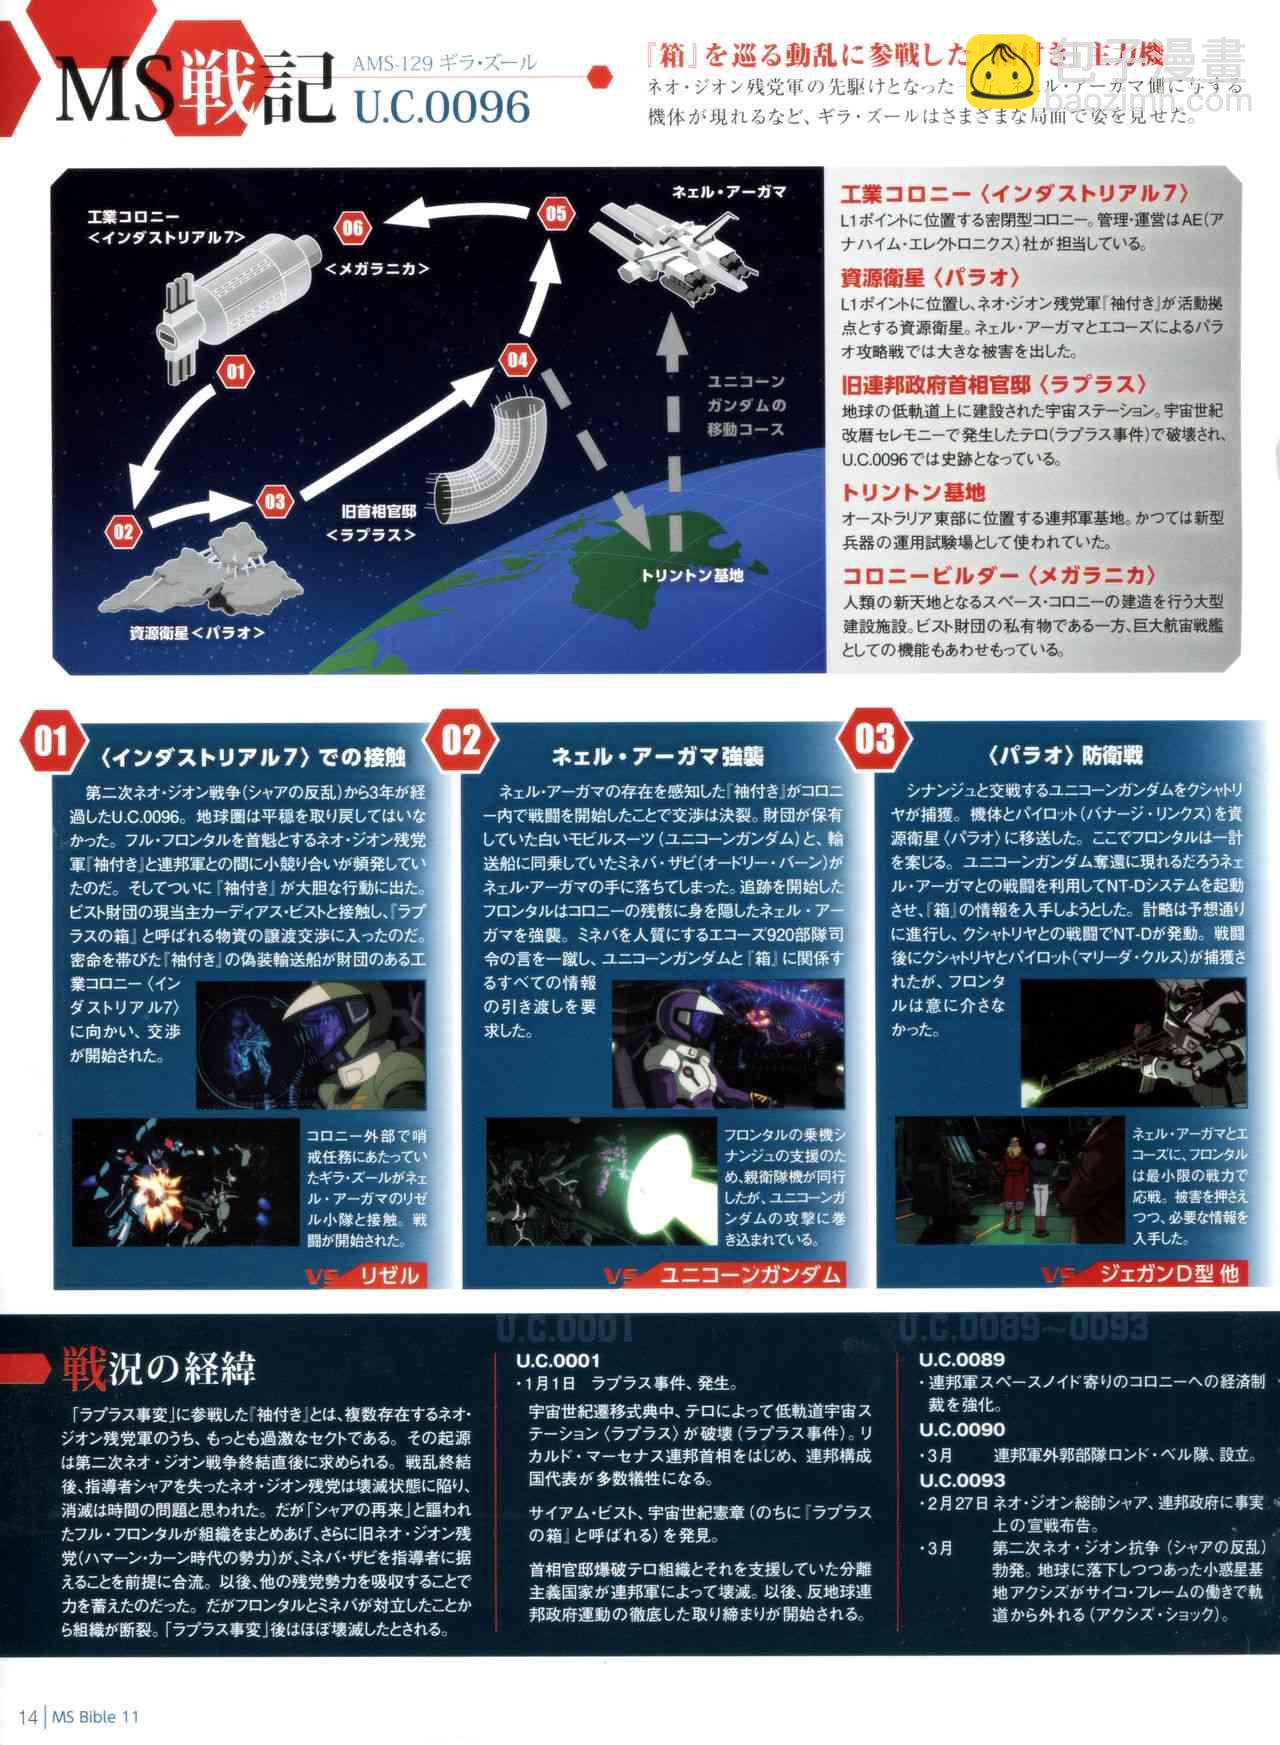 Gundam Mobile Suit Bible - 11卷 - 2